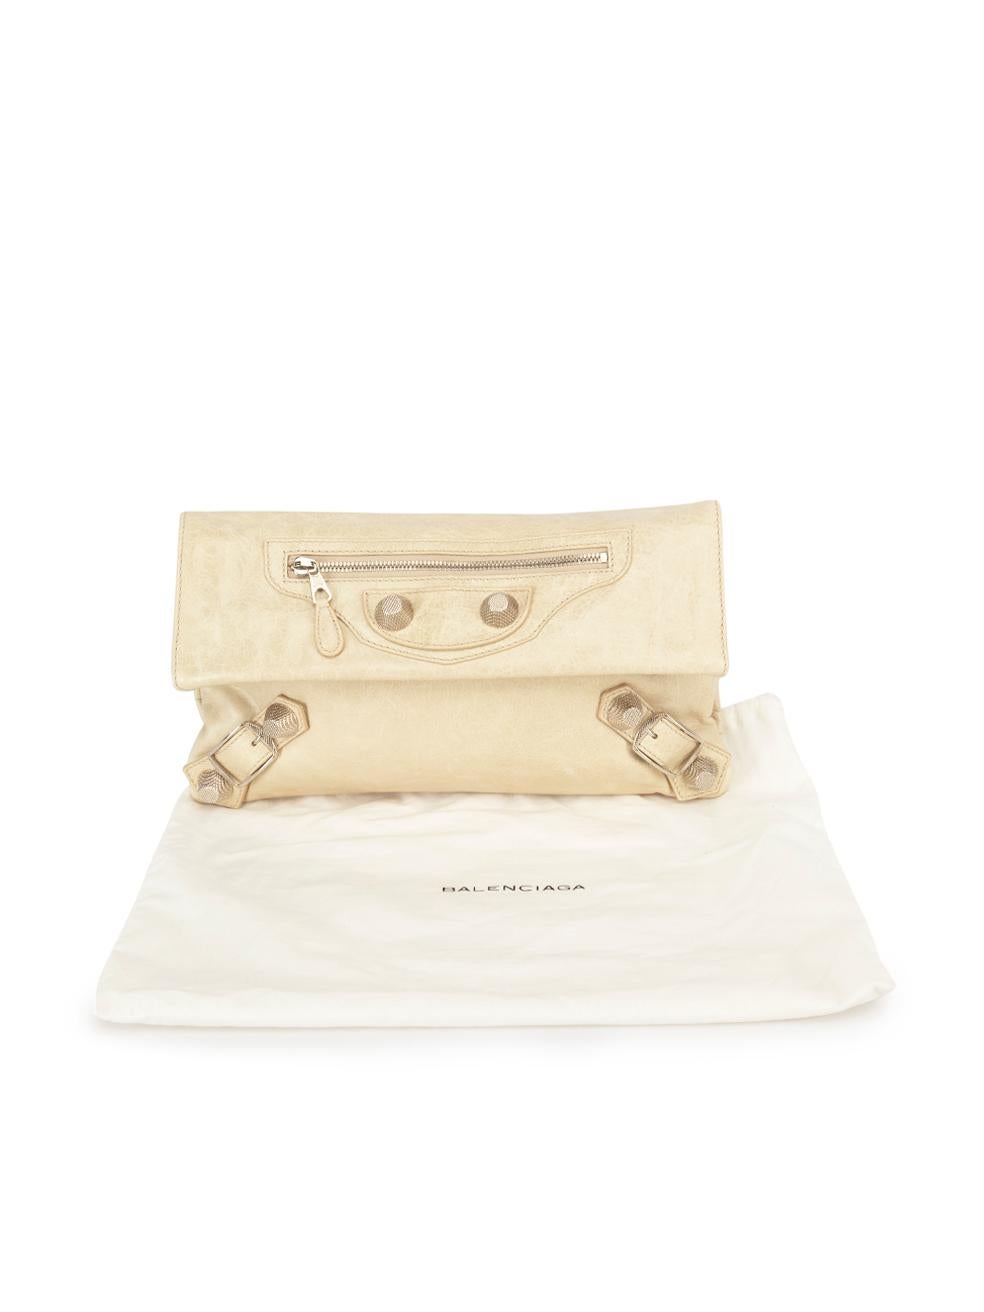 Balenciaga Women's Cream Leather Giant 21 Envelope Clutch 3